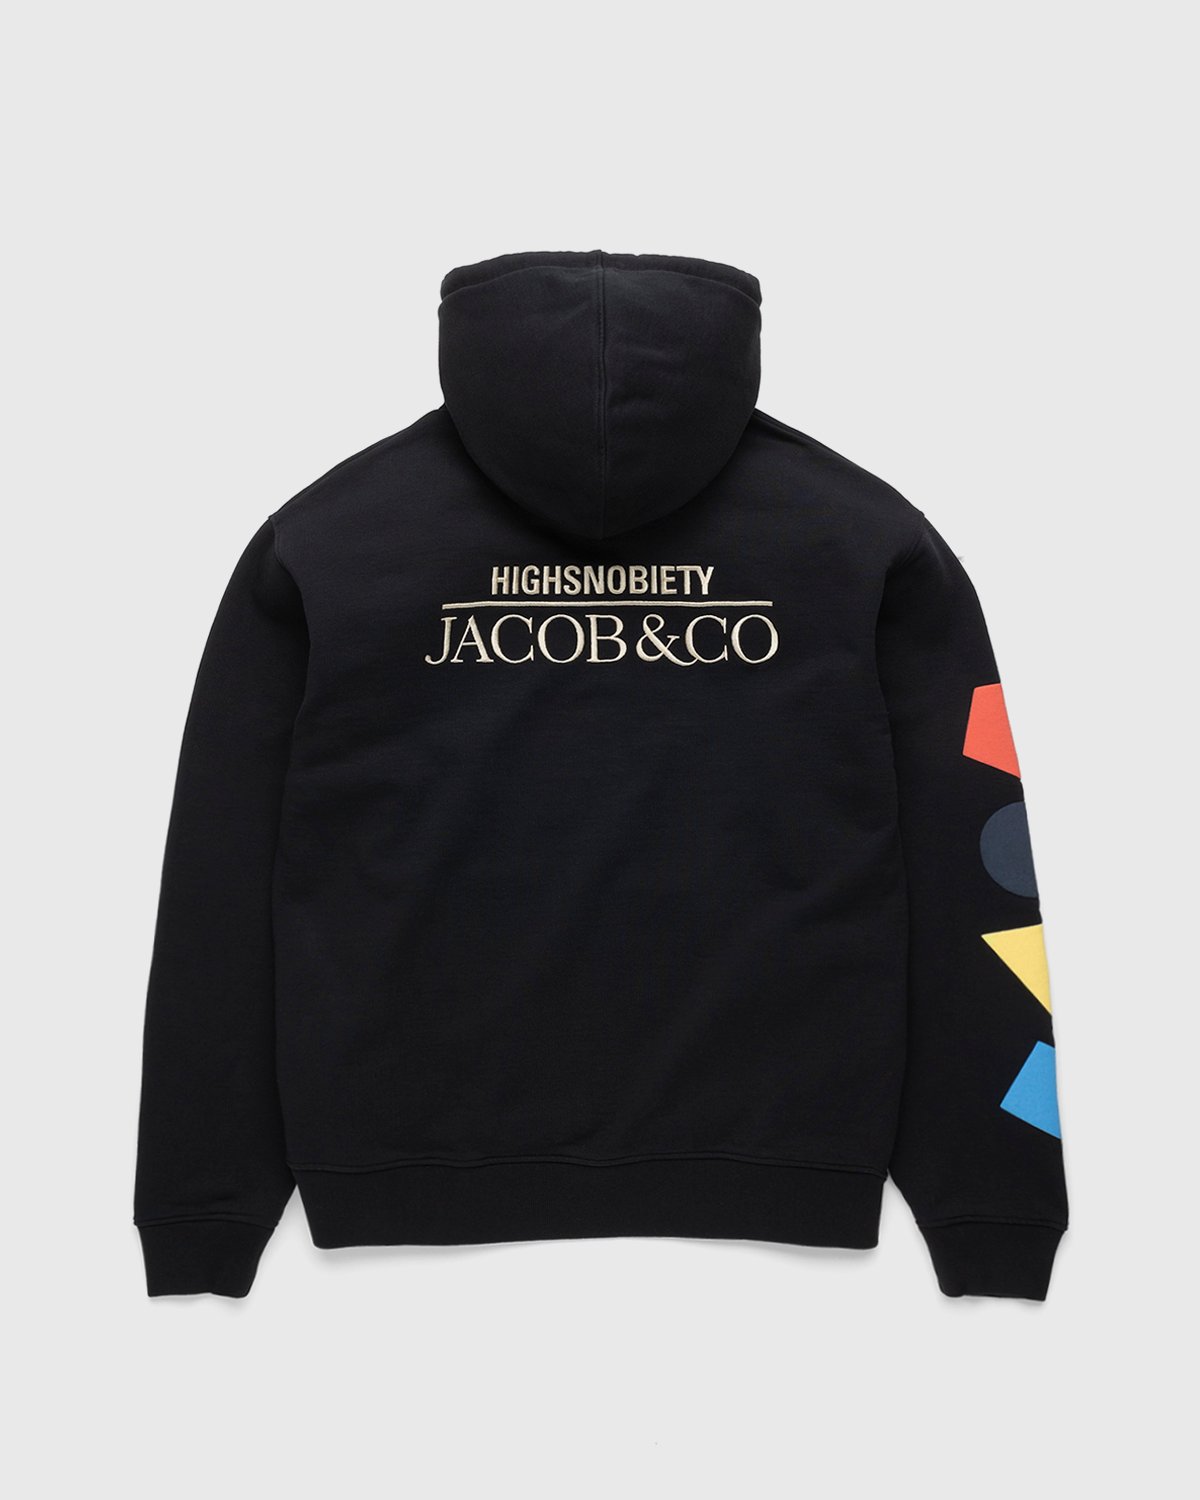 Jacob & Co. x Highsnobiety - City Fleece Hoodie Black - Clothing - Black - Image 2